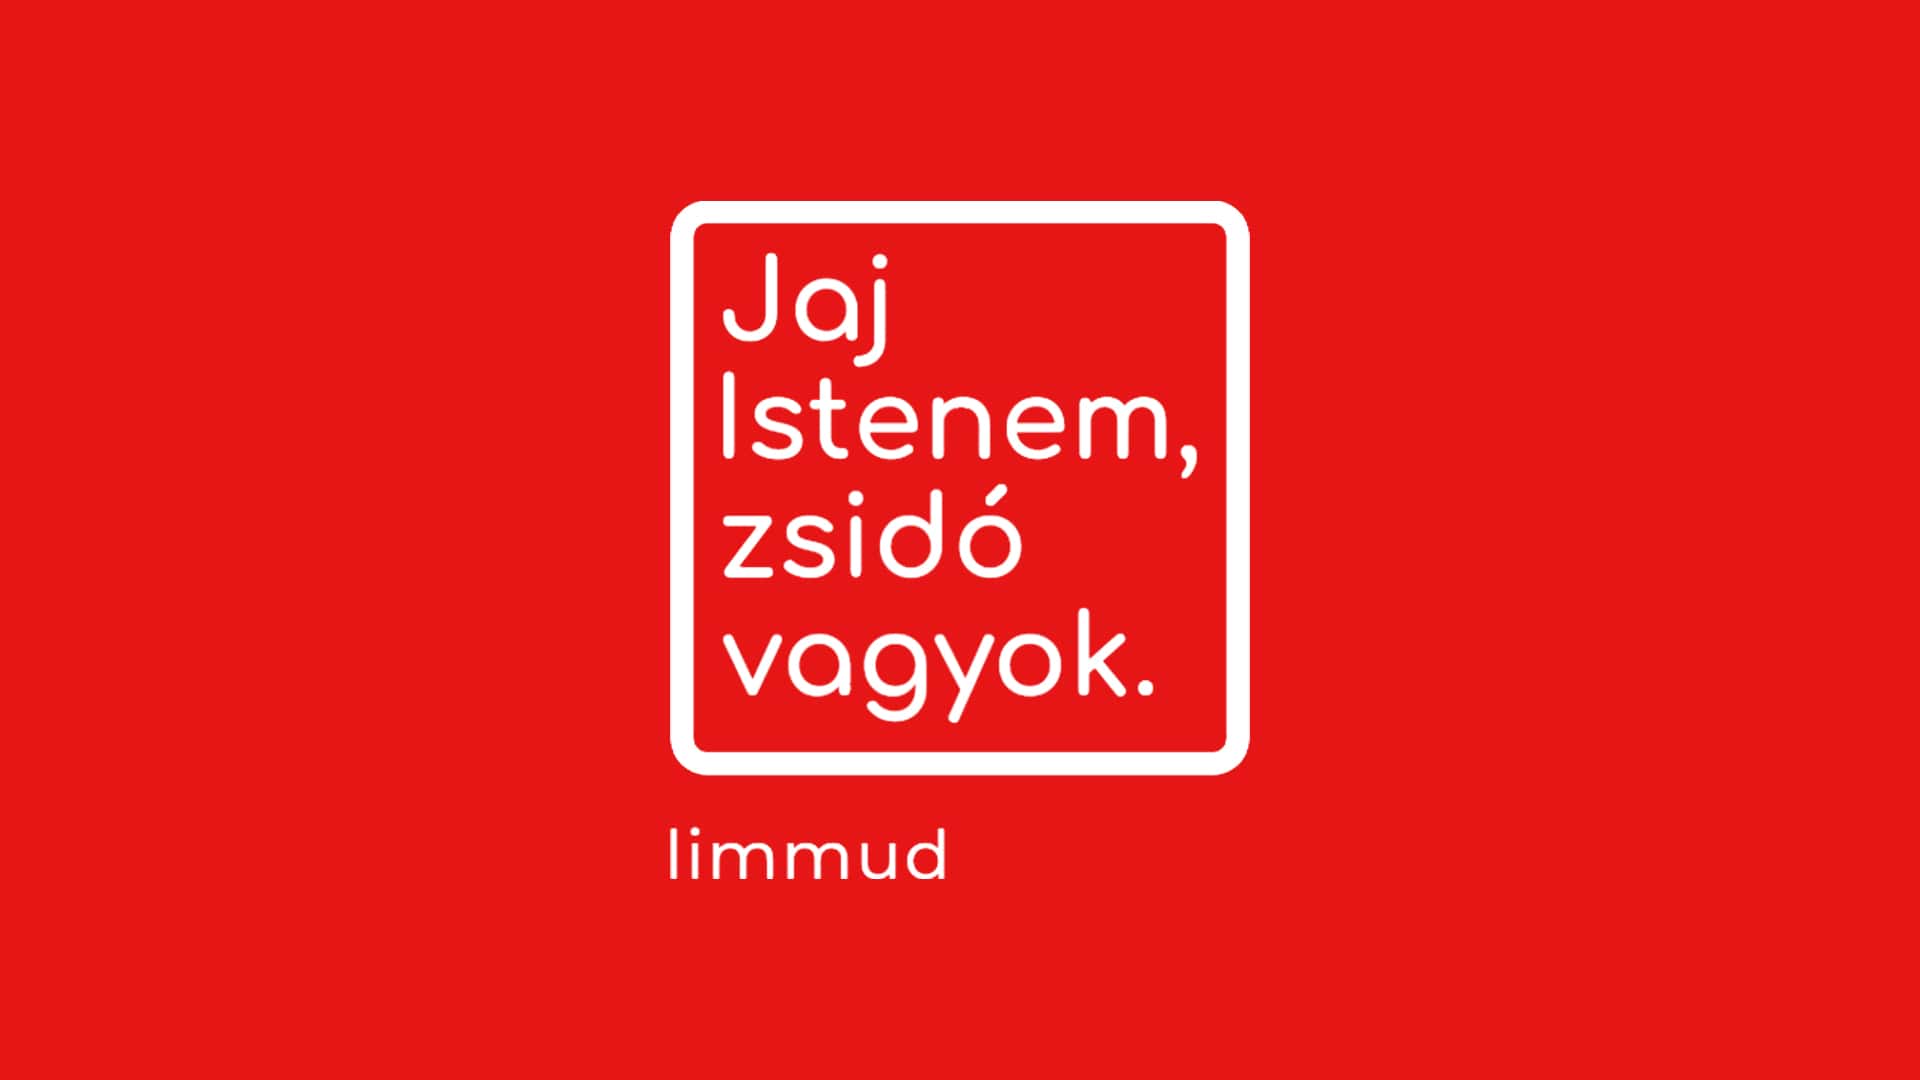 Limmud Global